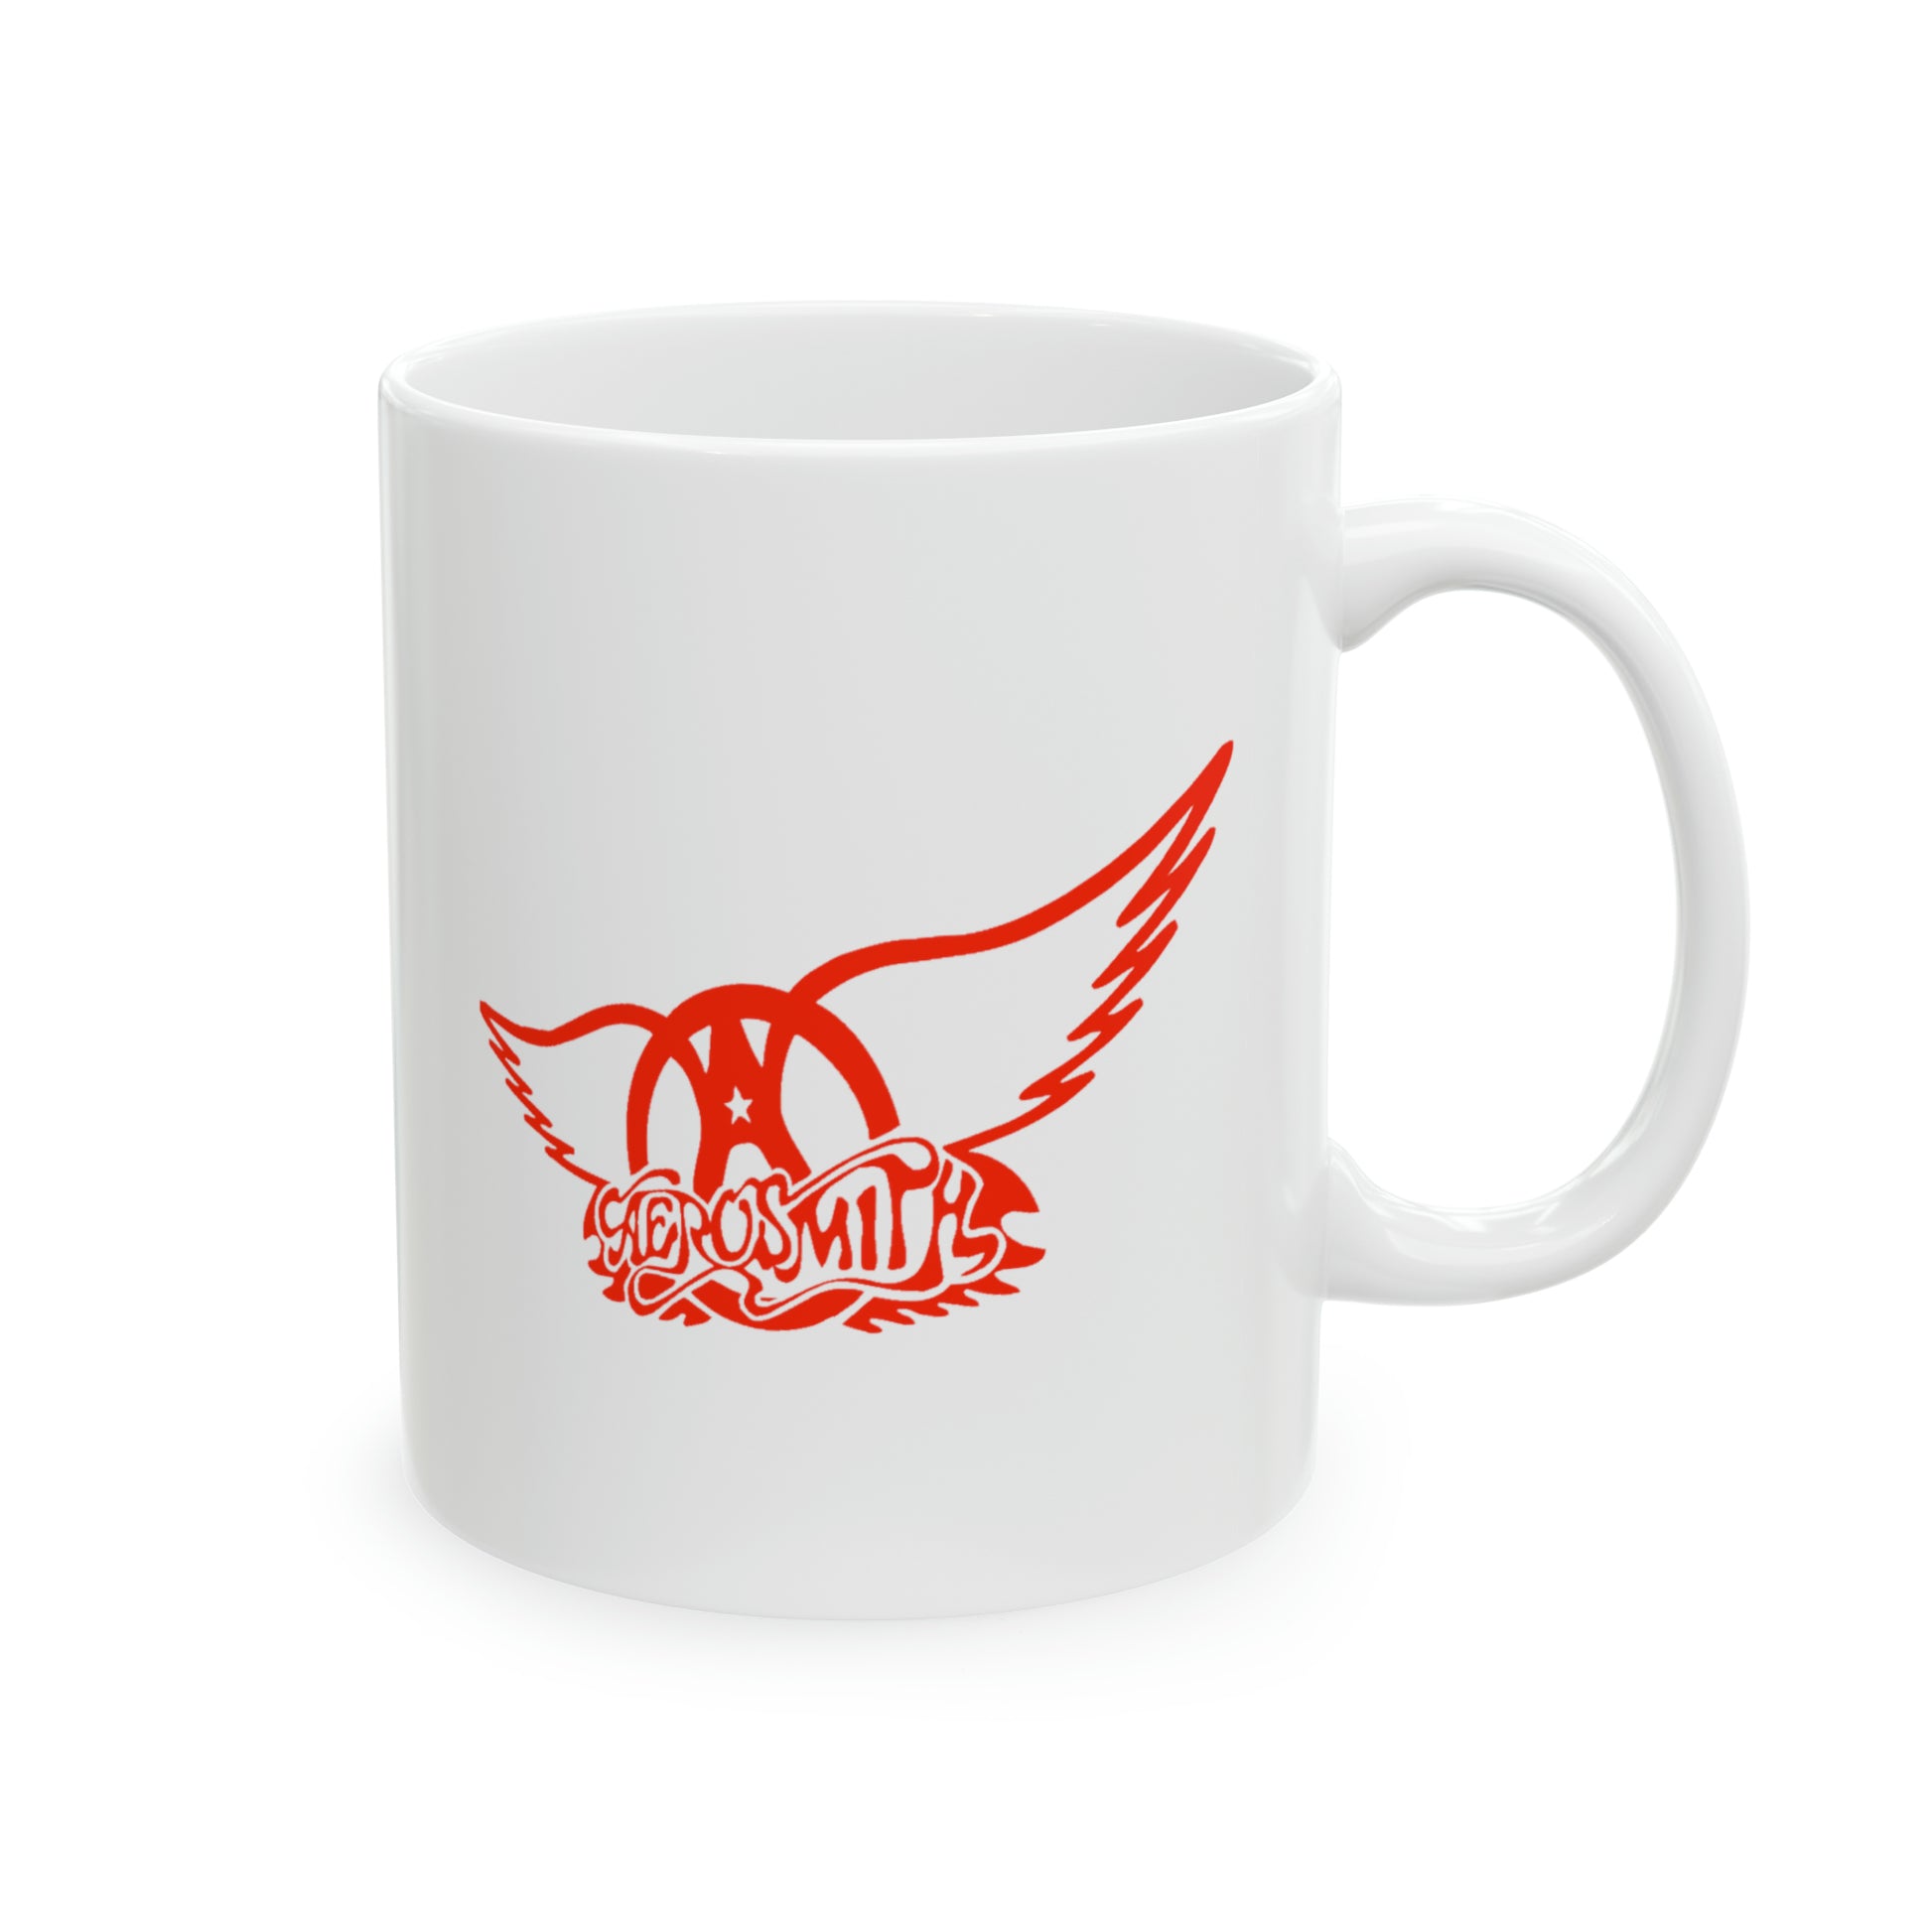 Aerosmith Coffee Mug - Double Sided Black Accent White Ceramic 11oz by TheGlassyLass.com